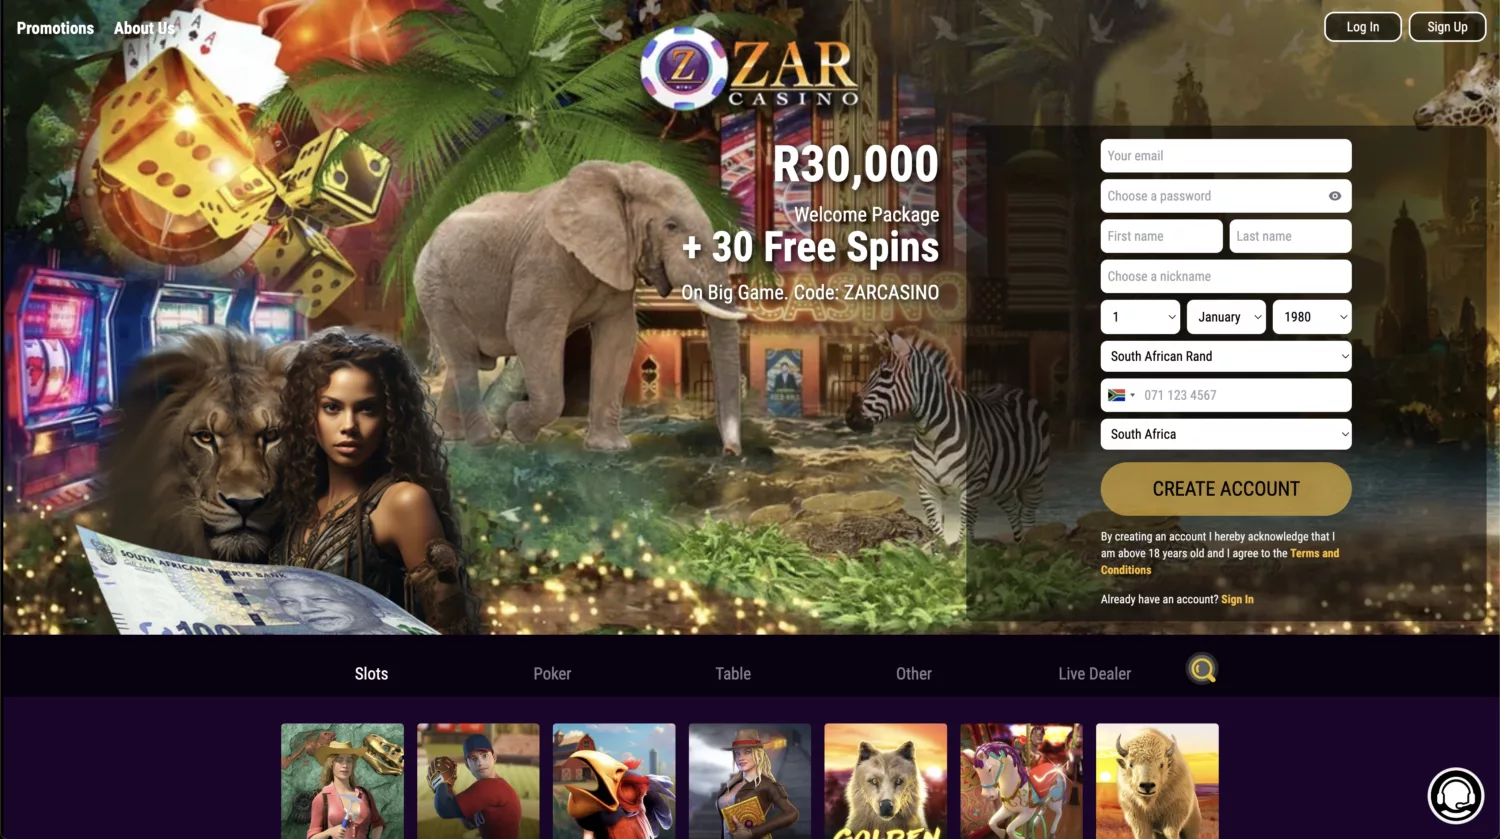 Zar casino homepage screenshot